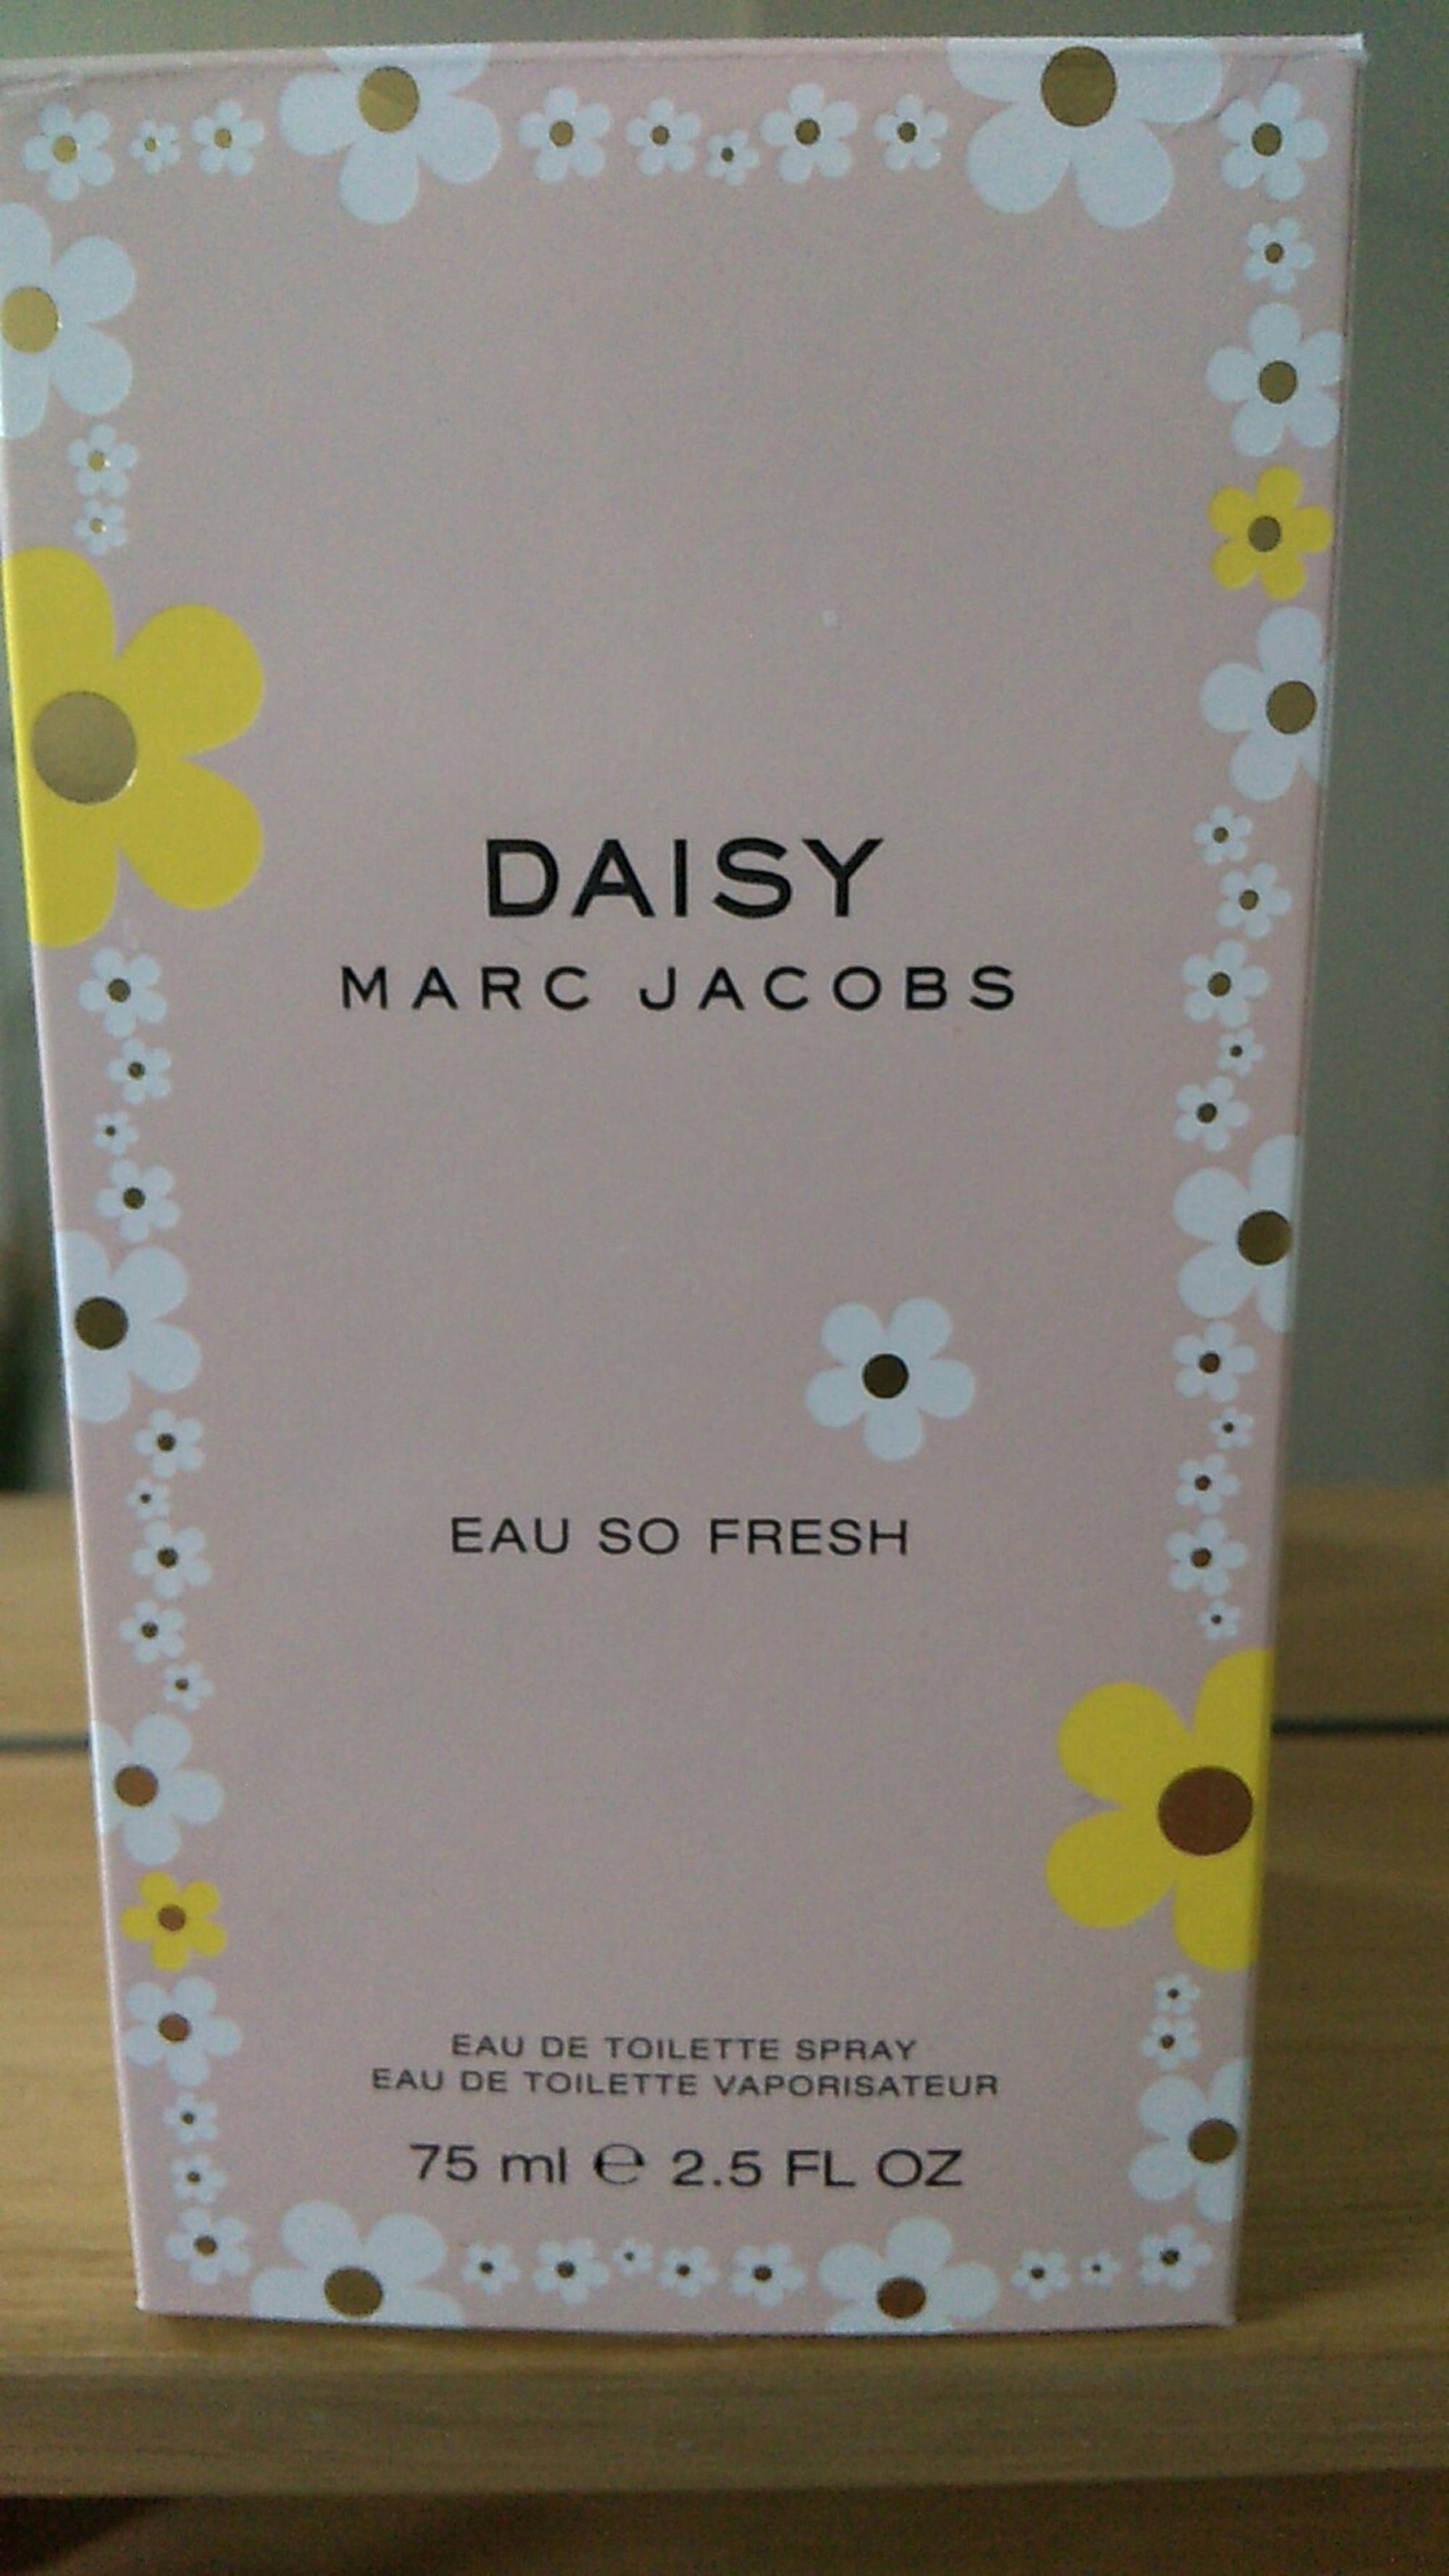 MARC JACOBS - Daisy eau so fresh - Eau de toilette spray